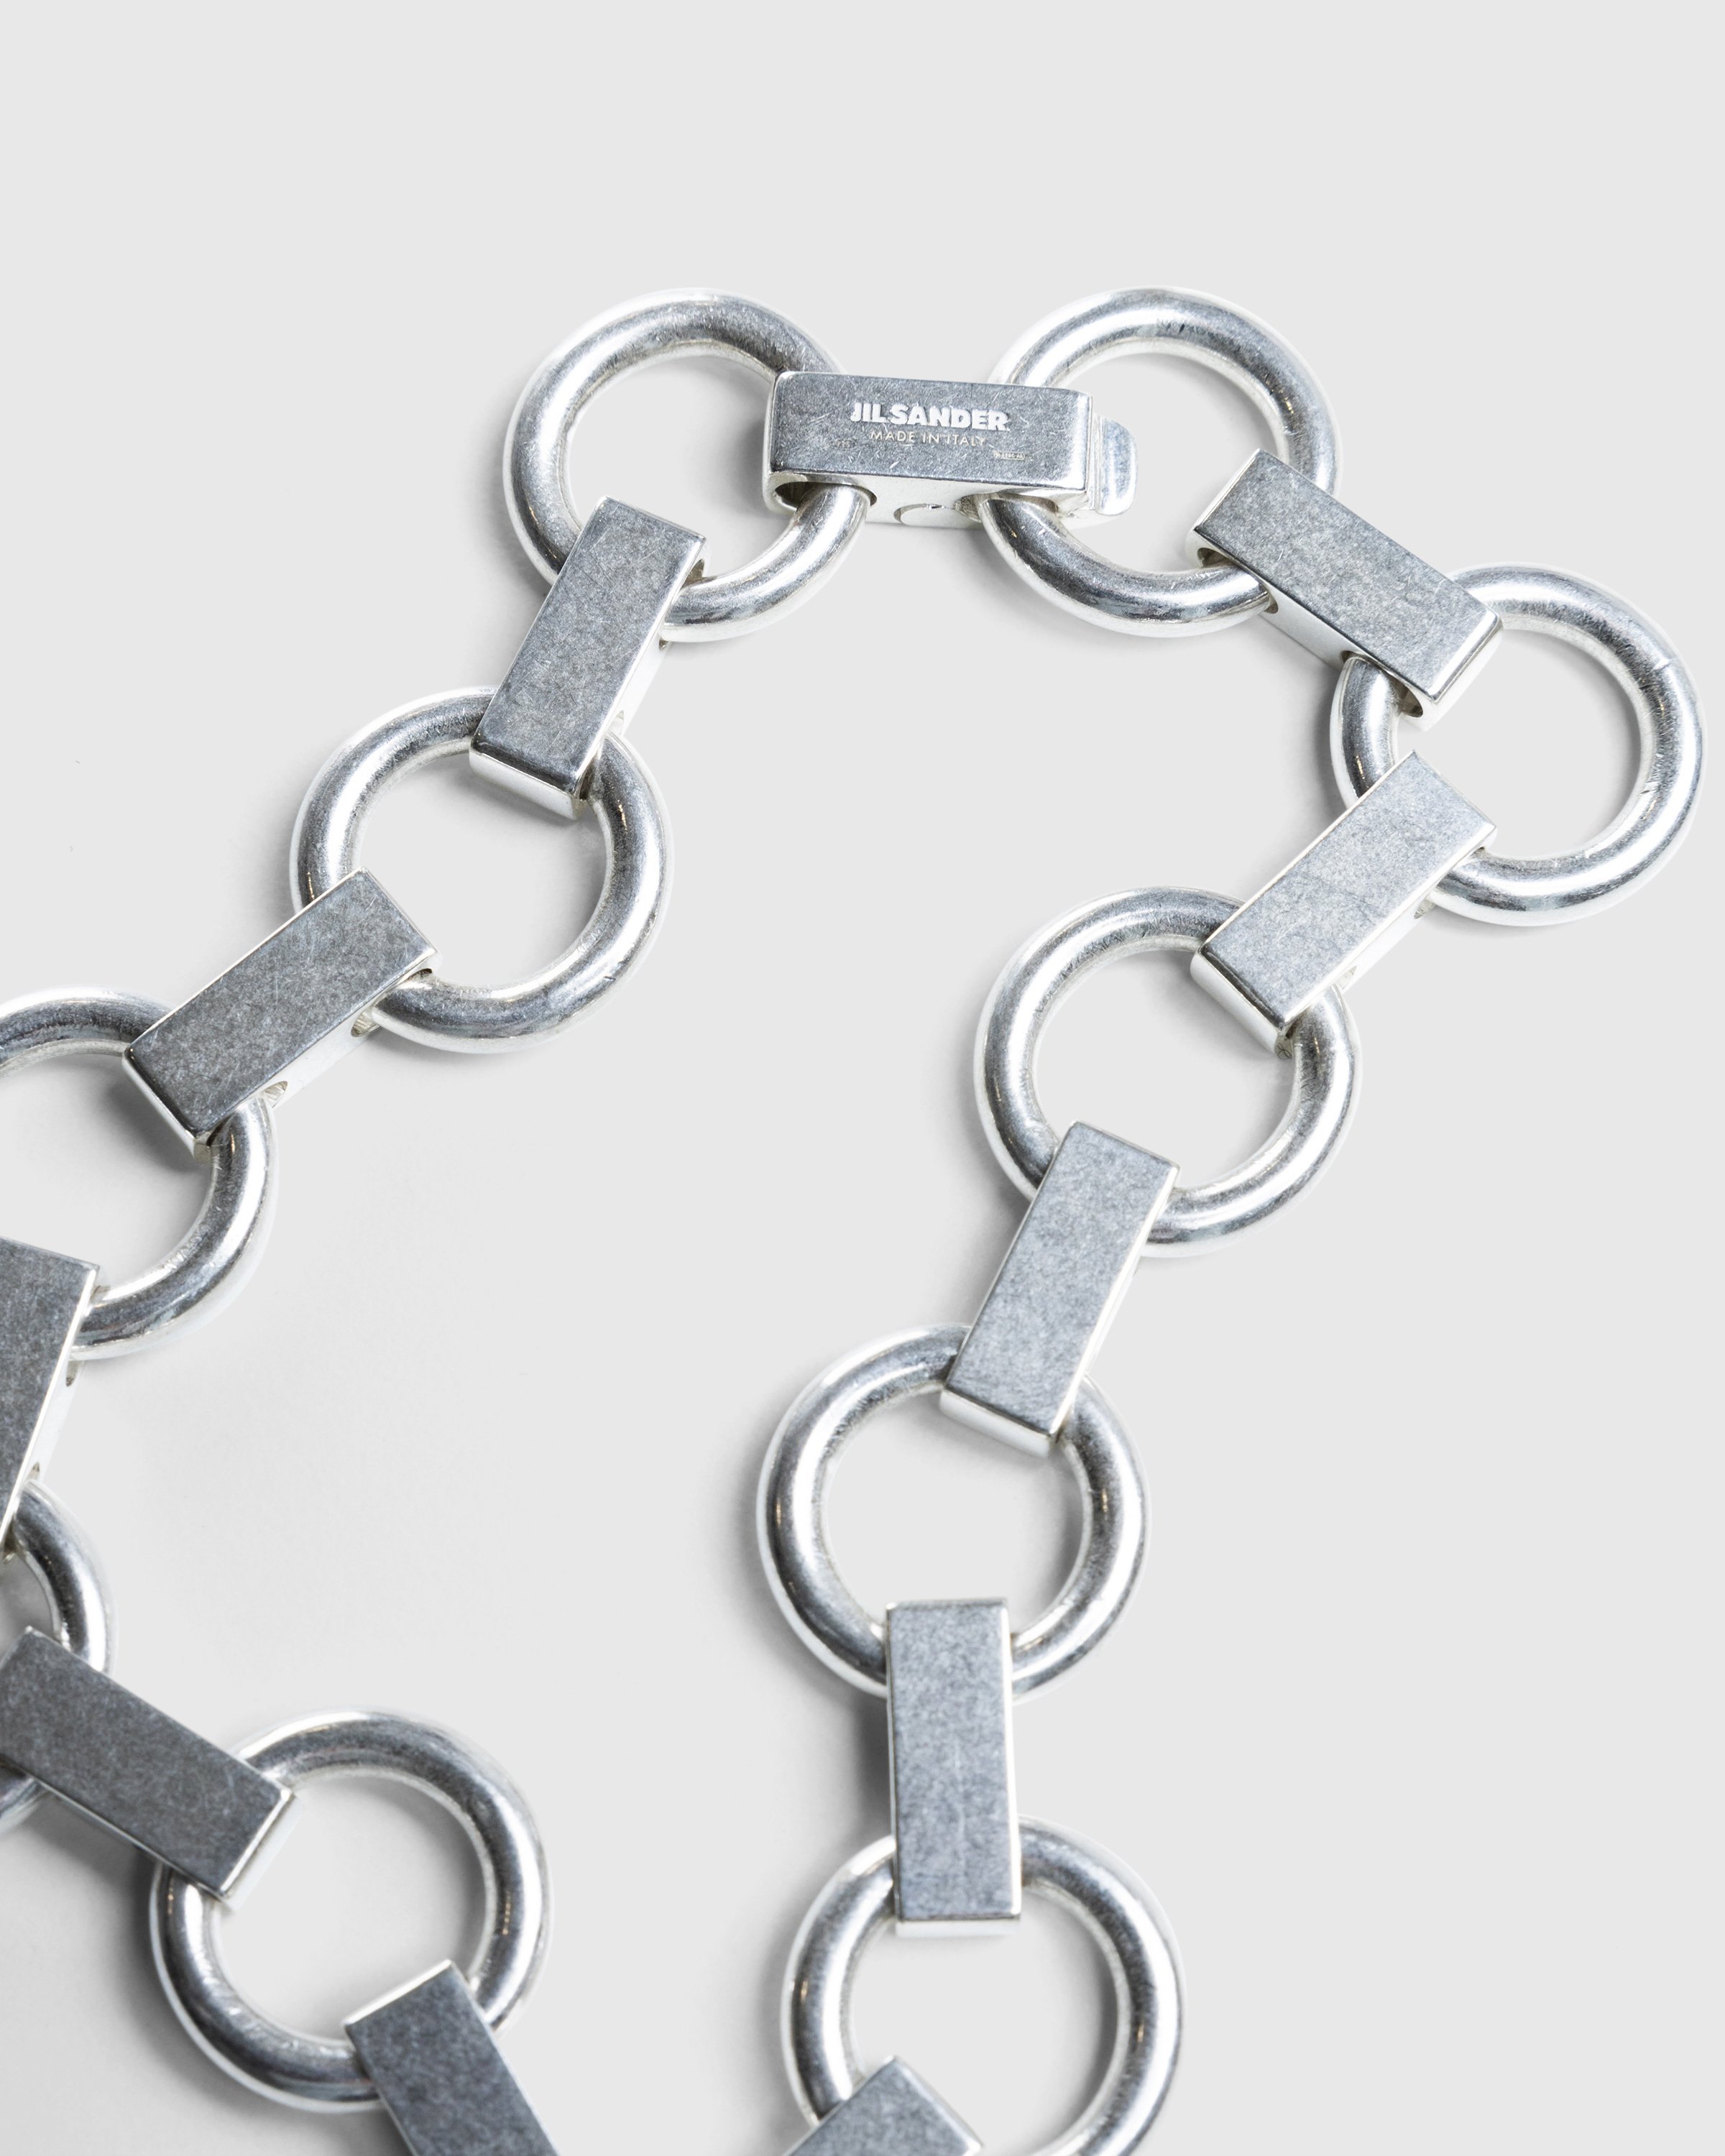 Jil Sander - Our New Chain Bracelet 1 - Accessories - Silver - Image 2